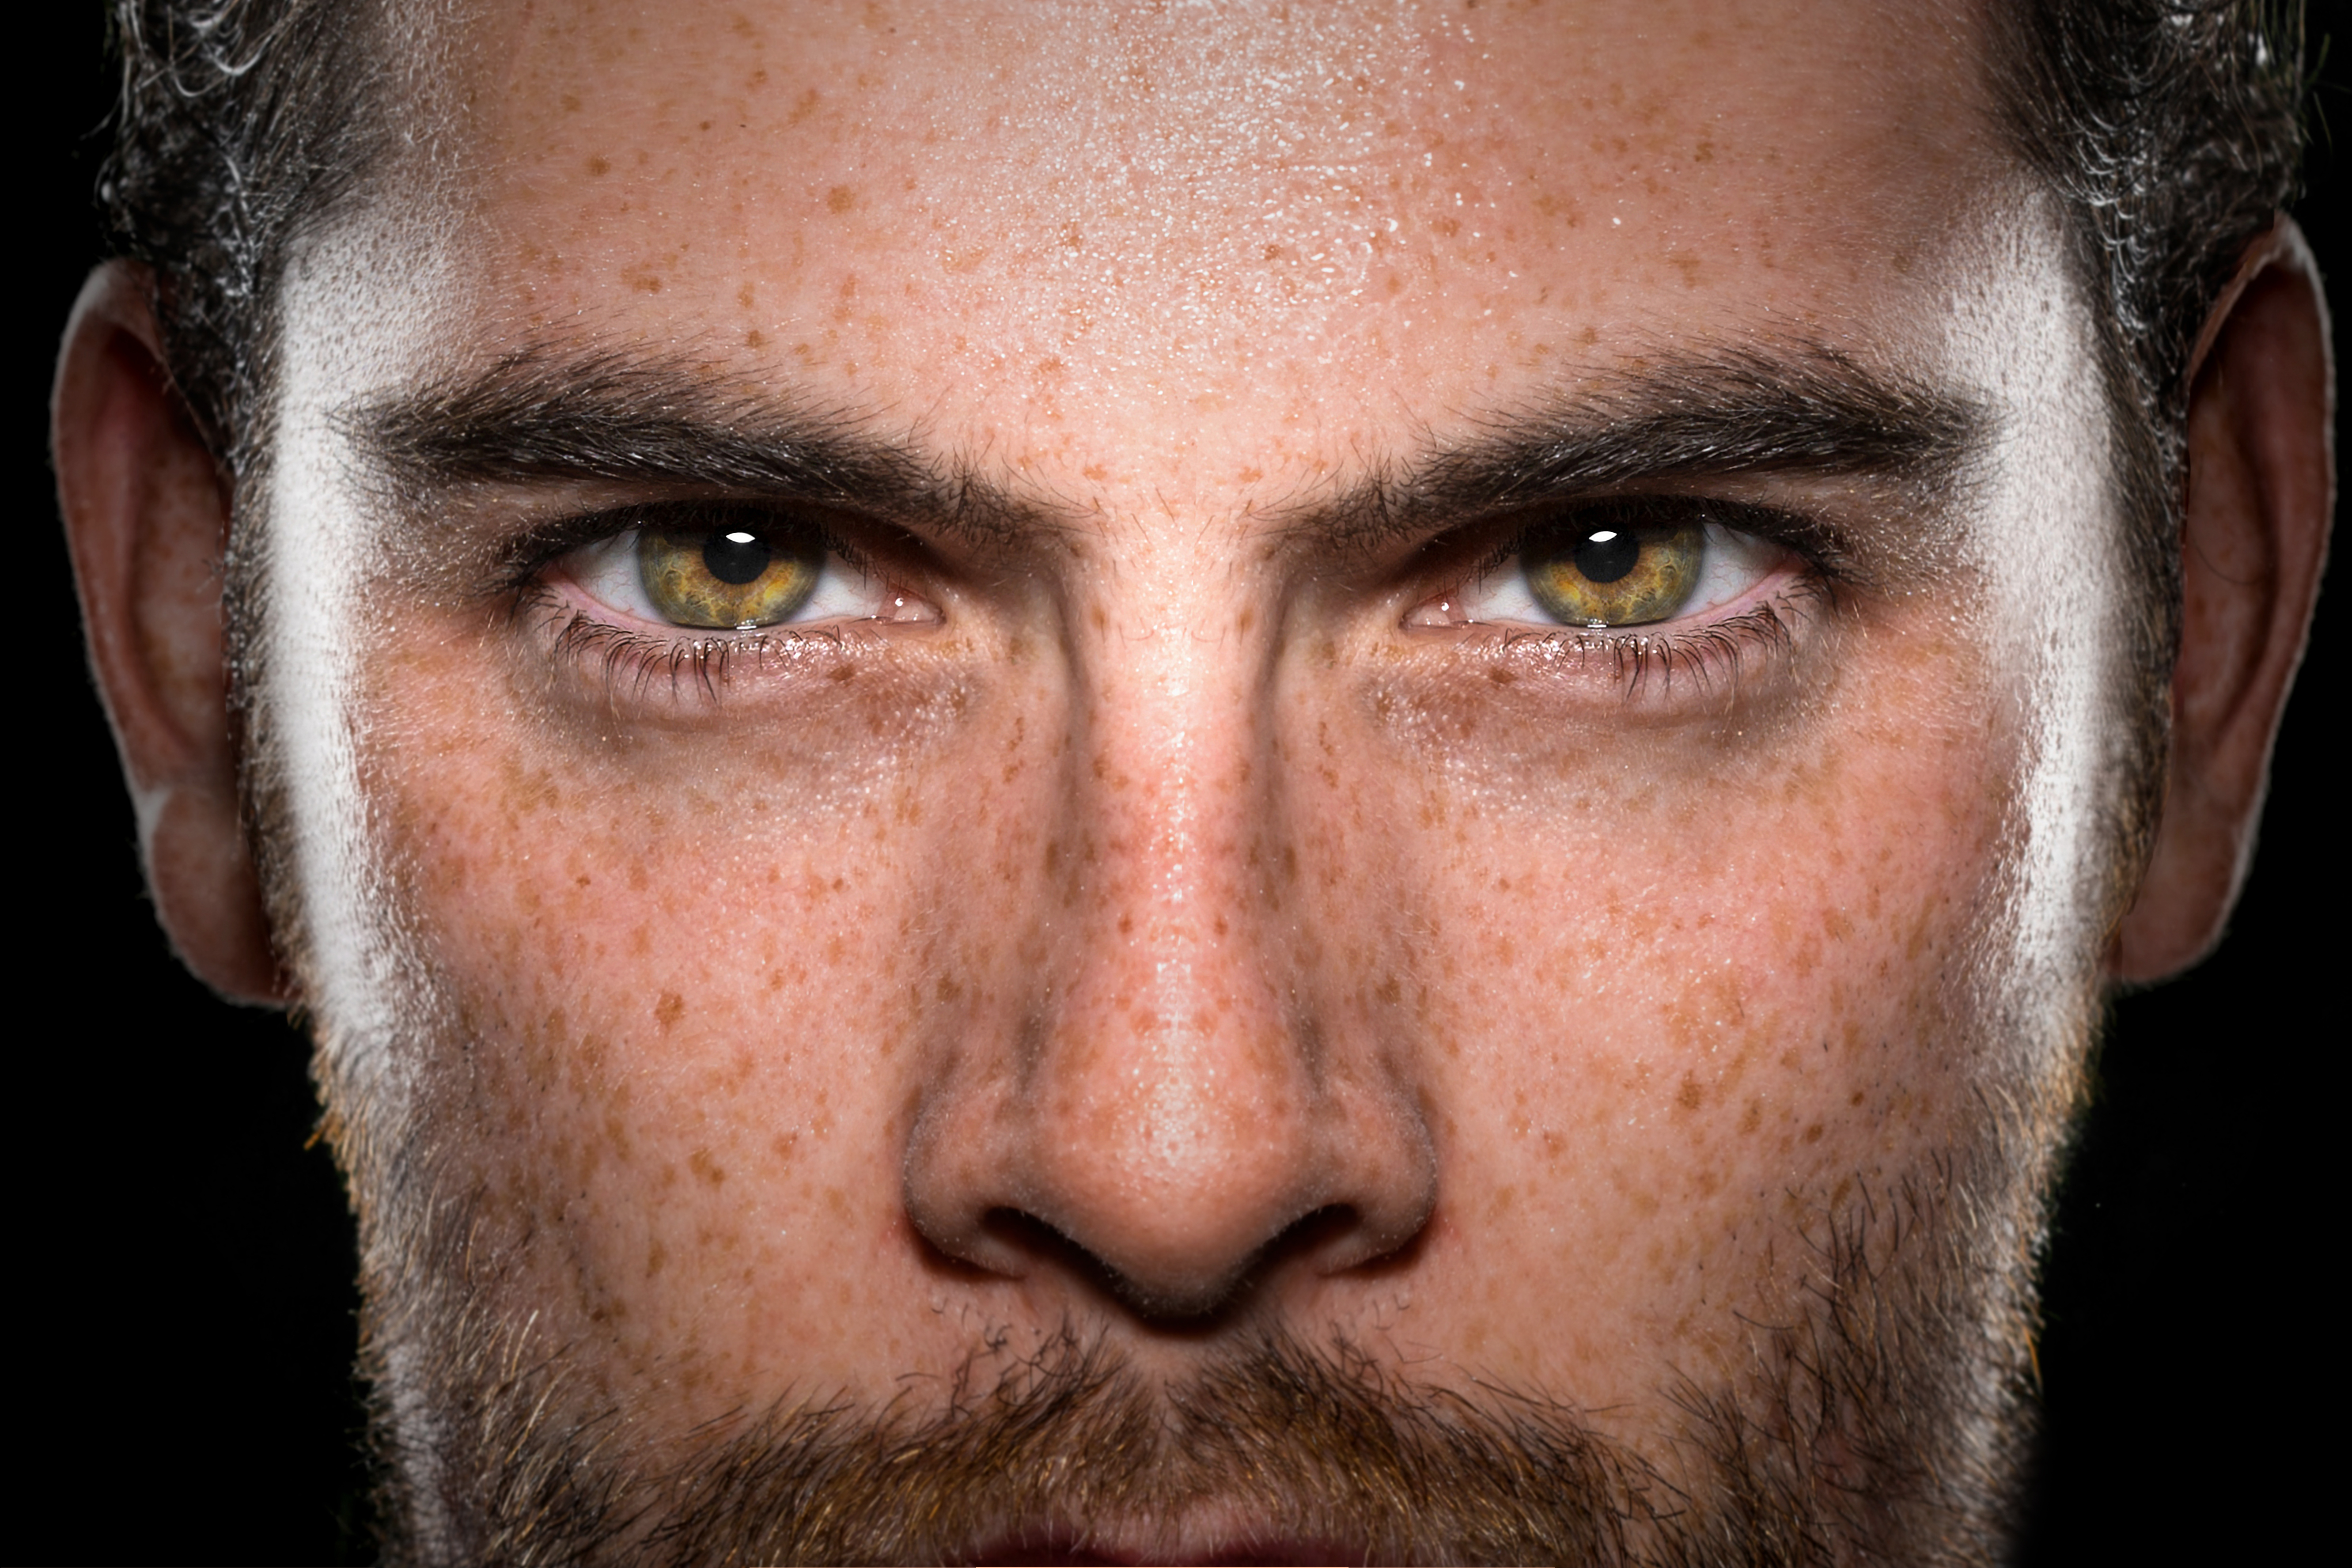 Close-up of a man's face | Source: Shutterstock